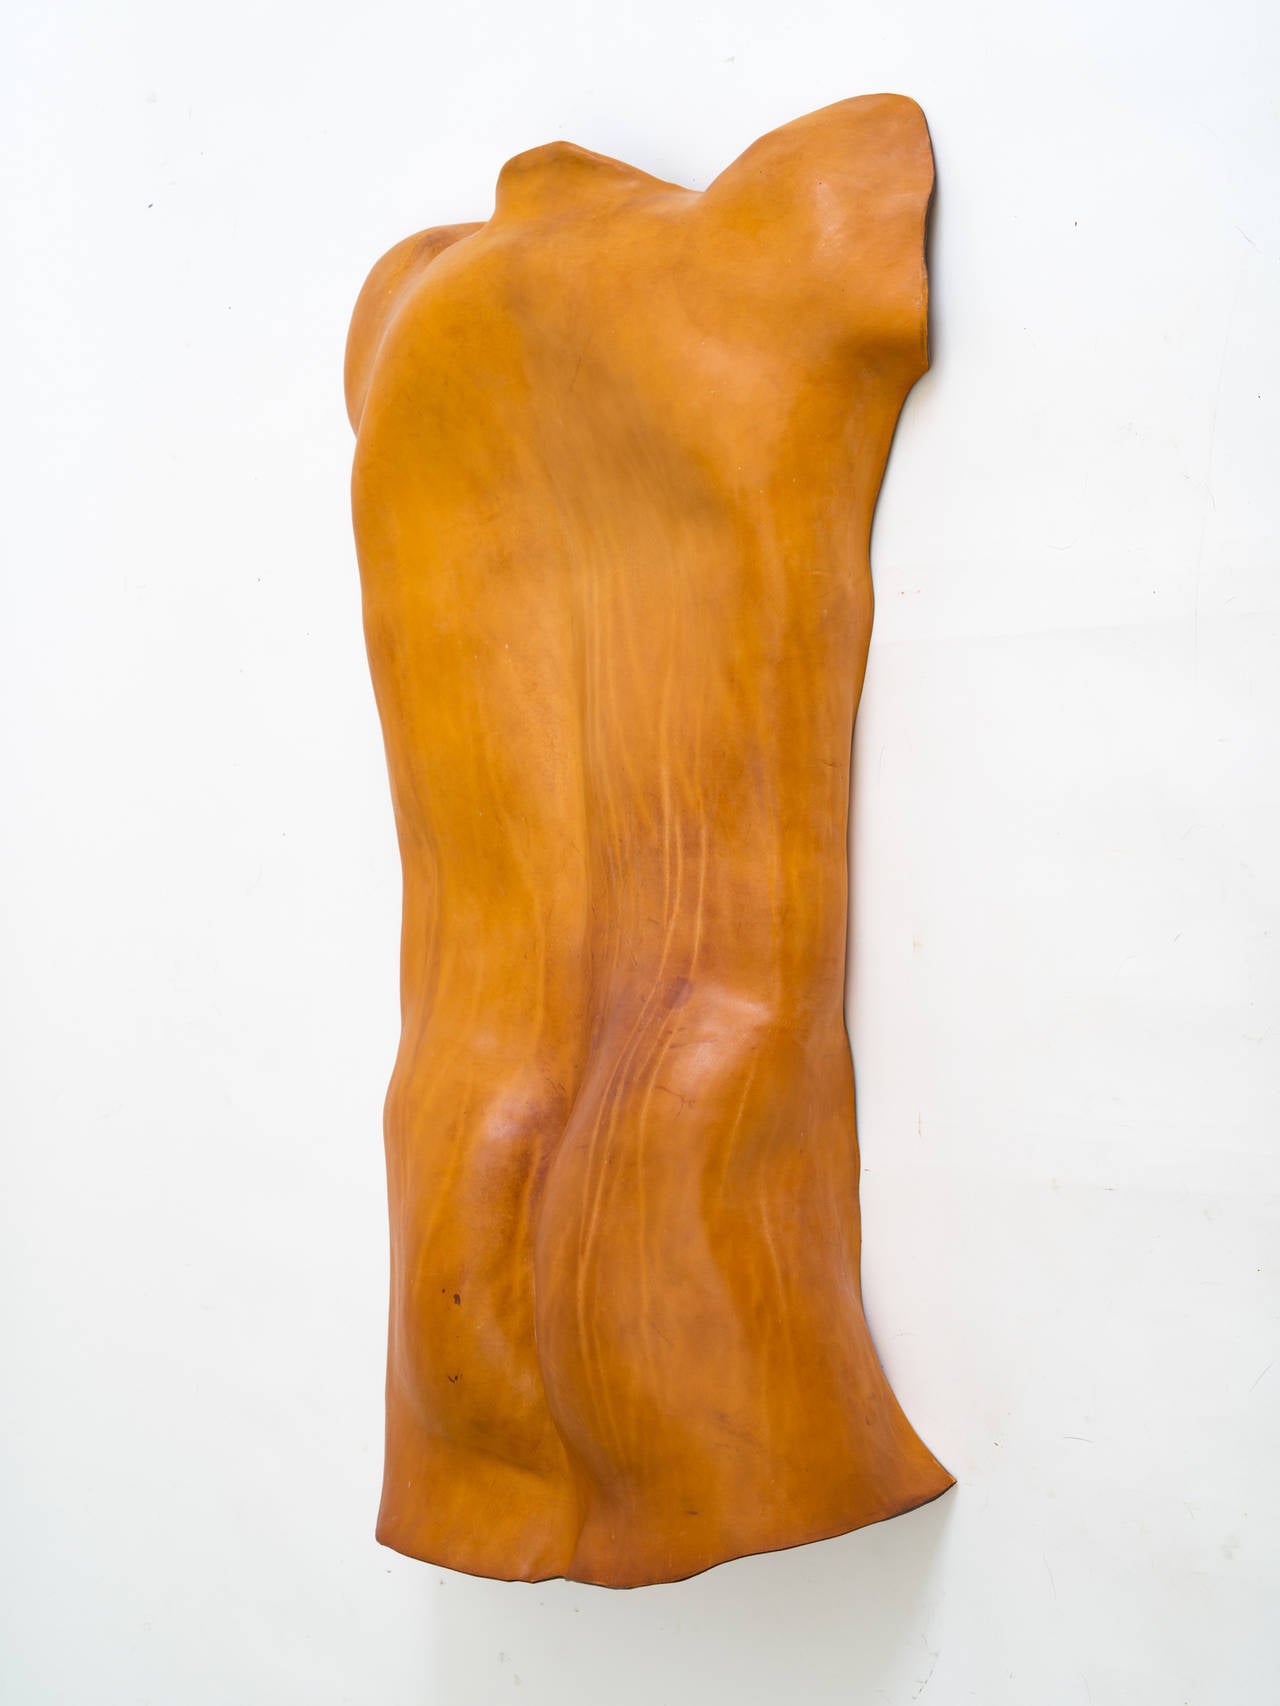 Leather torso created by artist Marcia Lloyd in 1984.